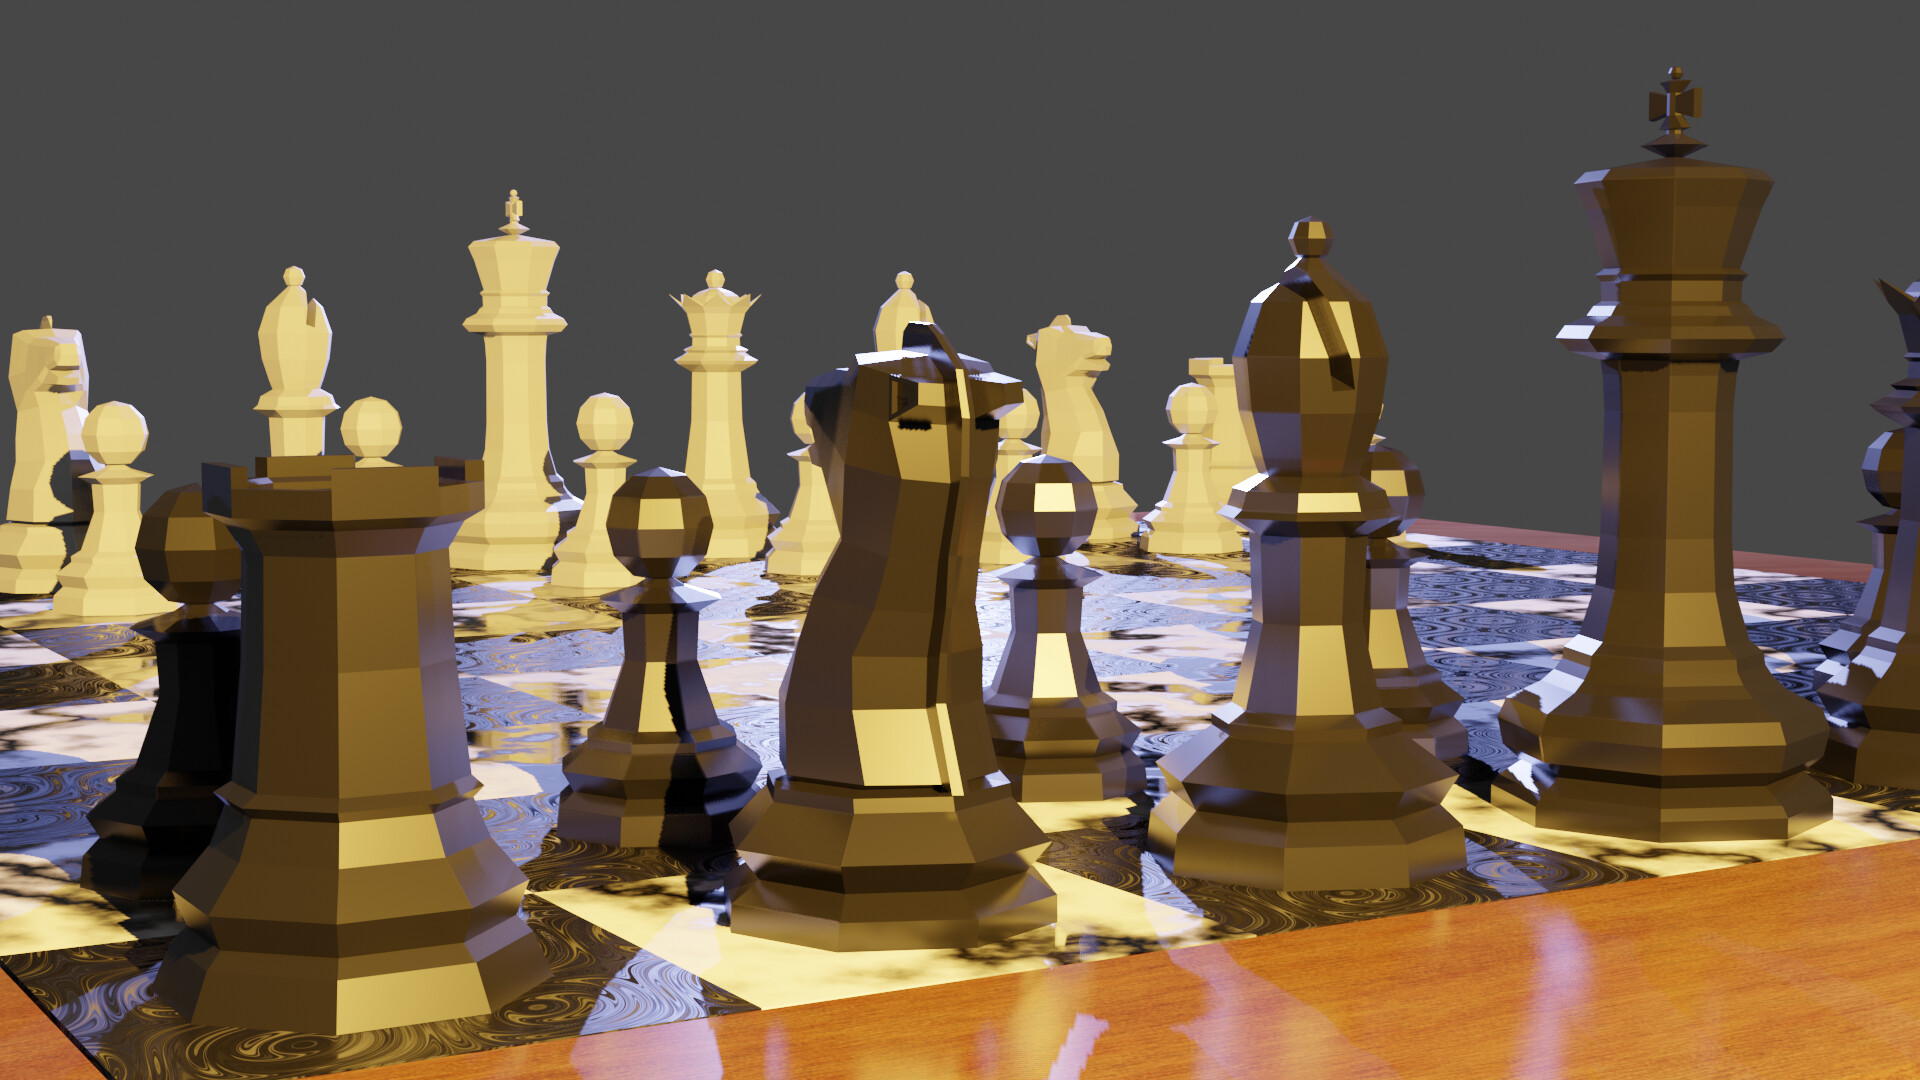 Blender Beginner's Tutorial - Make a Chess Rook 